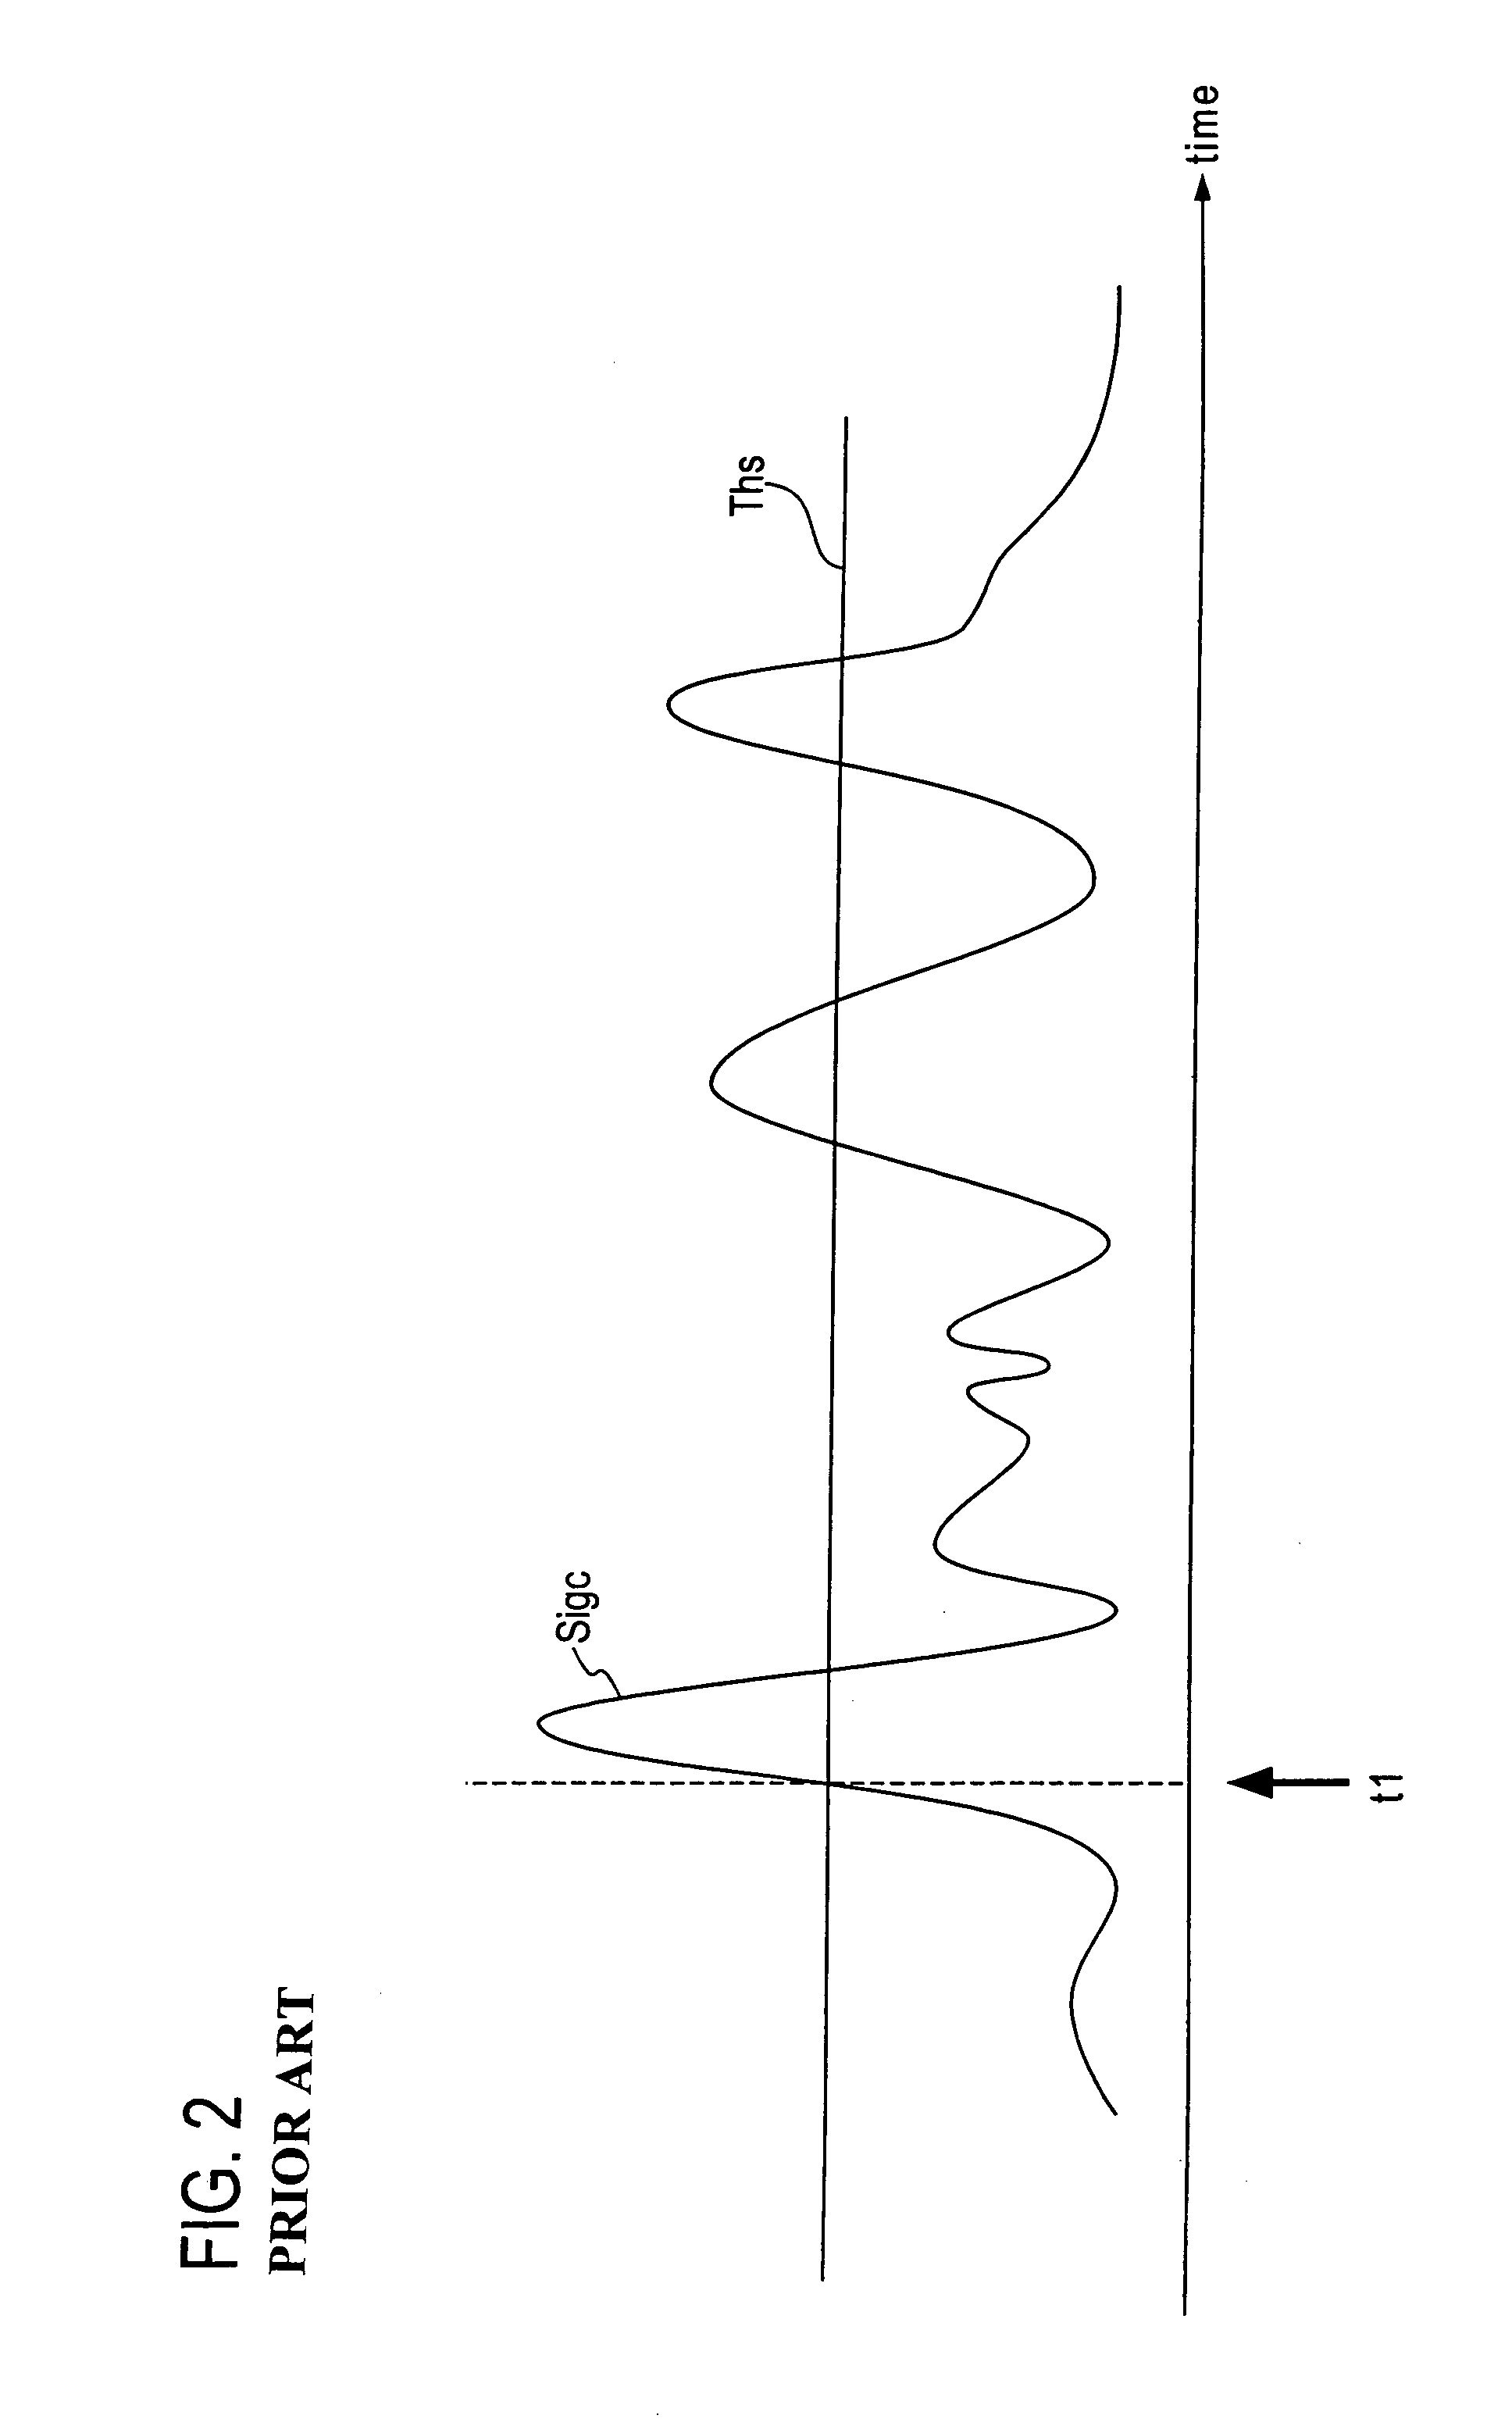 Adaptive equalization apparatus and method